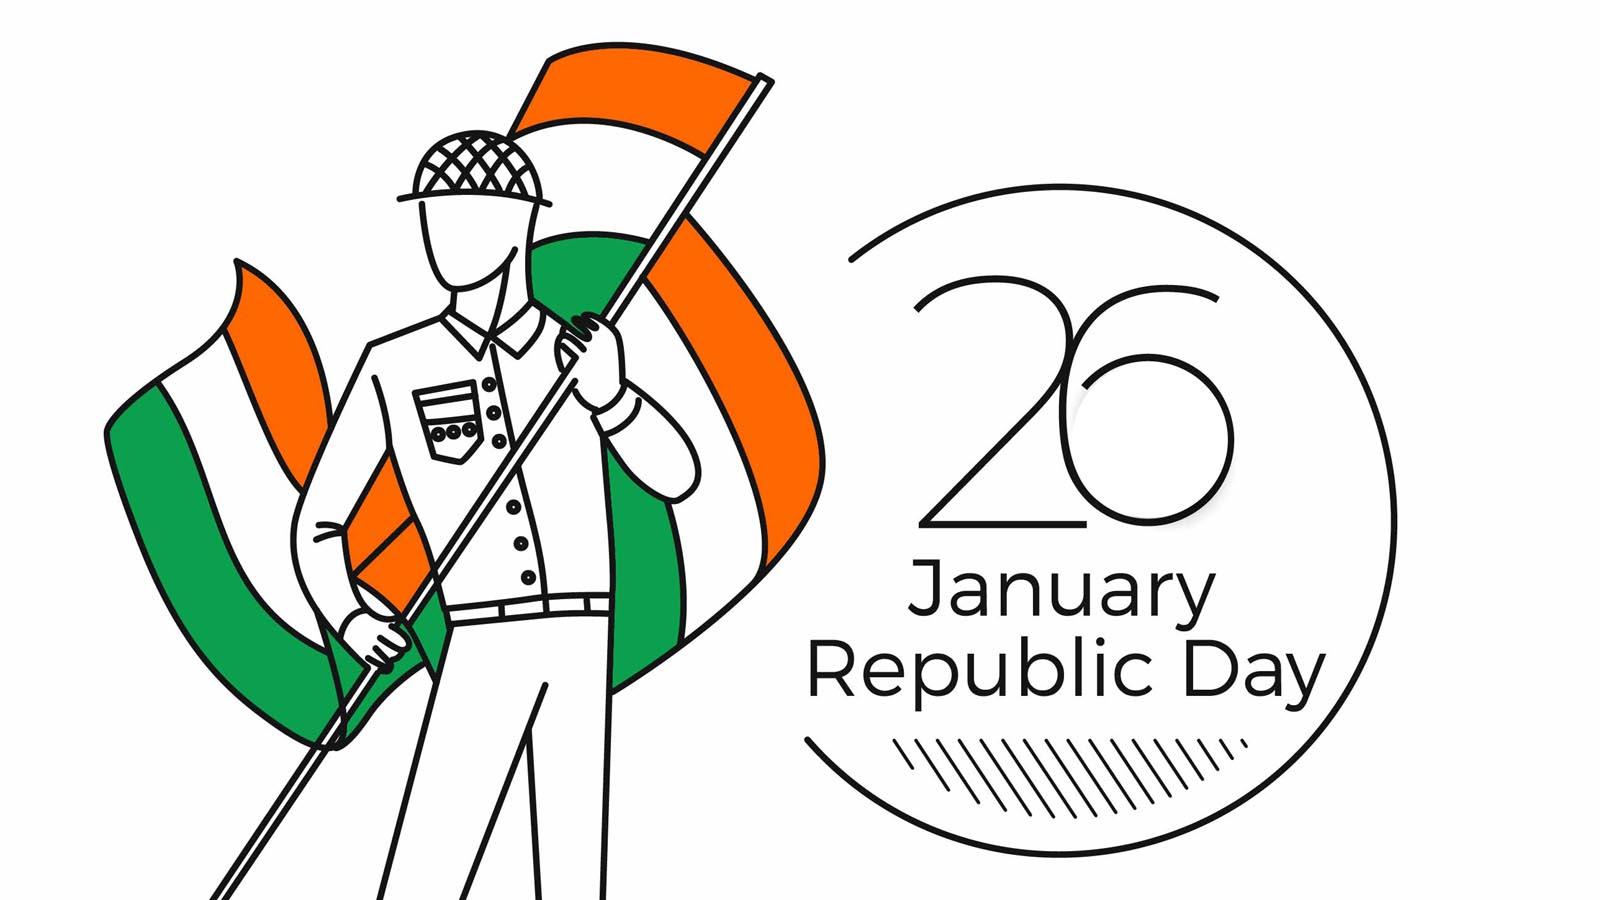 गणतंत्र दिवस पर बॉस के लिए शुभकामनाएं Happy Republic Day Messages and Wishes to Boss